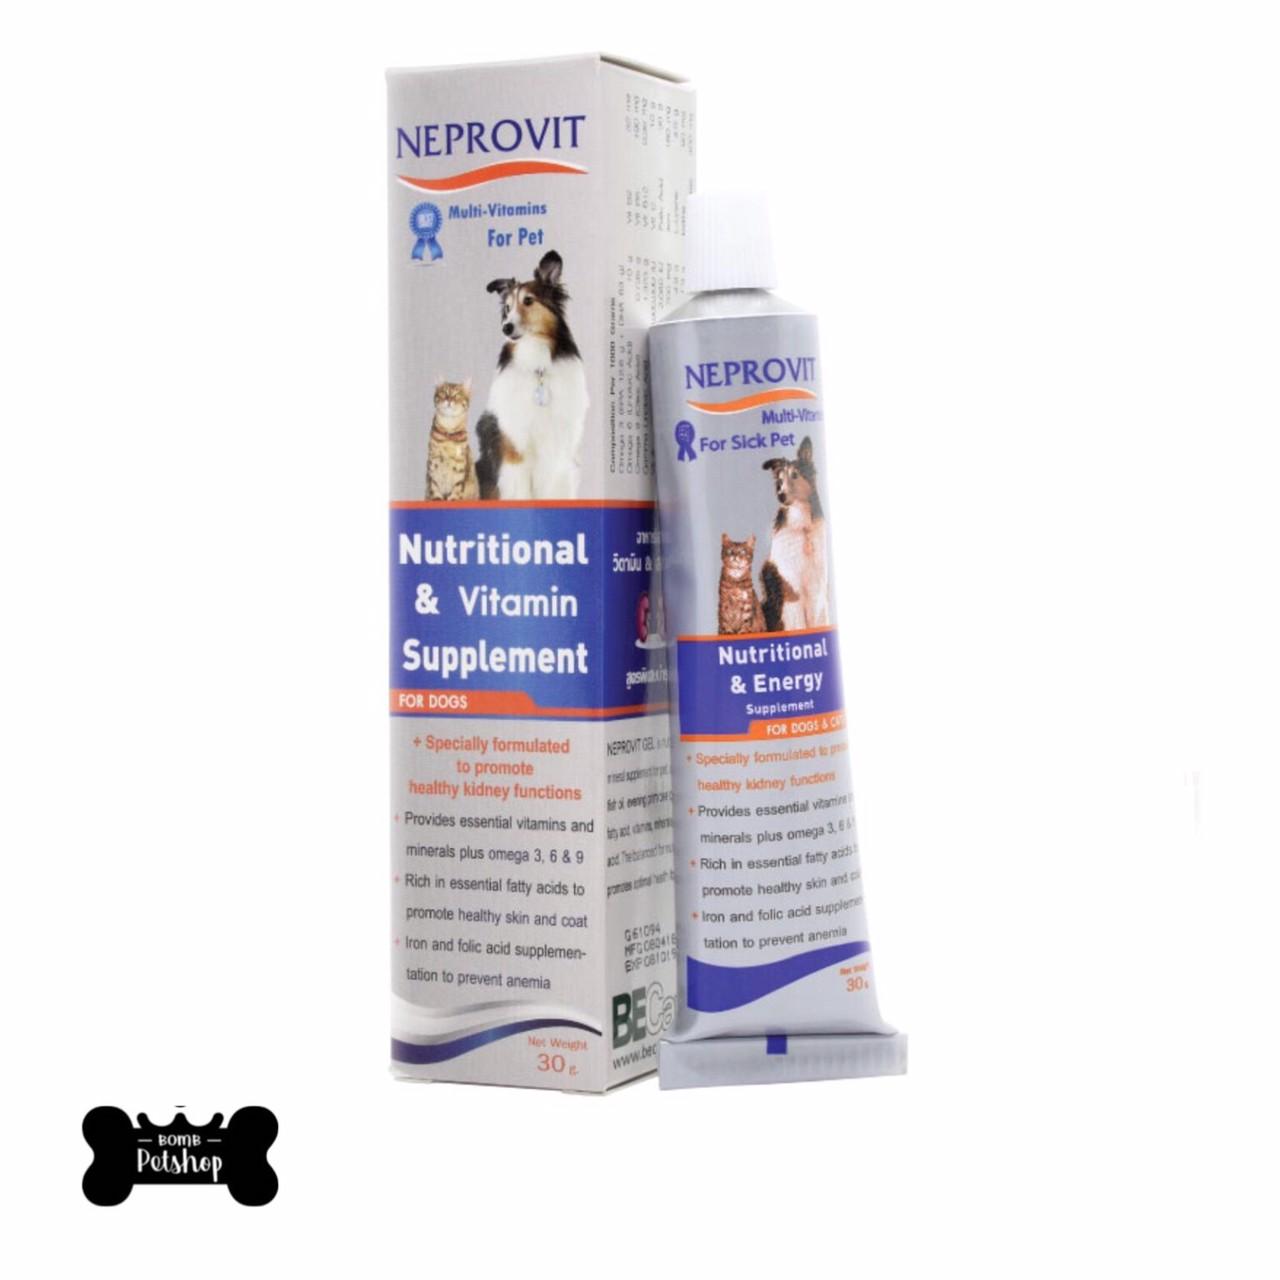 Neprovit kidney care supplement gel อาหารเสริม สุนัข แมว ที่มีปัญหาโรคไต แบบเจล ขนาด 30g x 2 หลอด